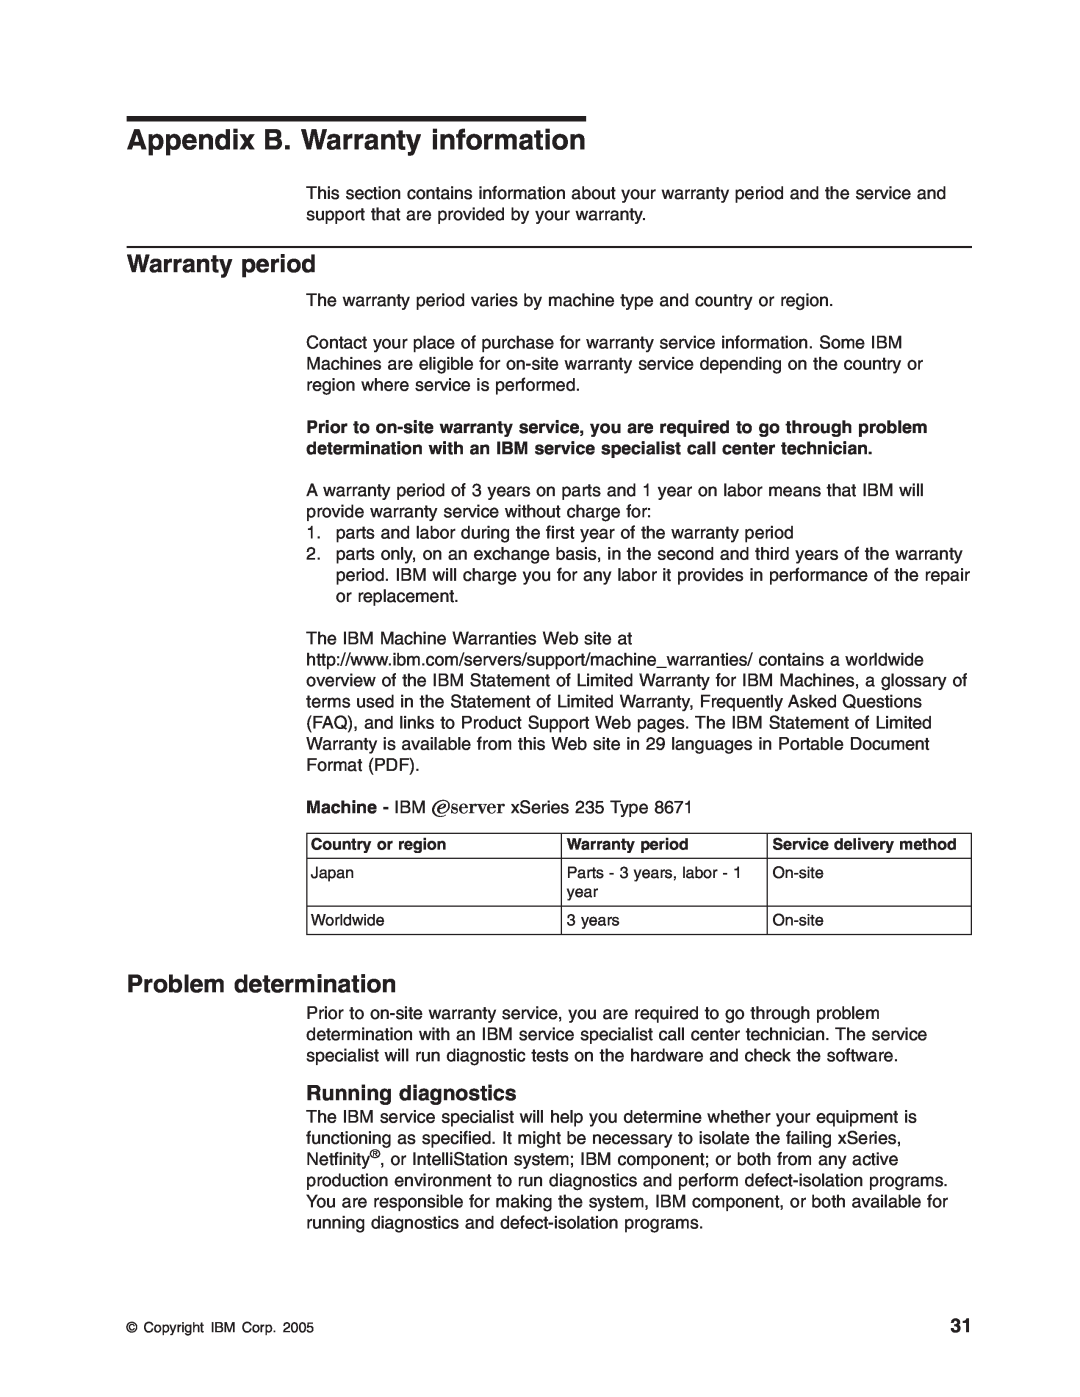 IBM xSeries 235 manual Appendix B. Warranty information, Warranty period, Problem determination, Running diagnostics 